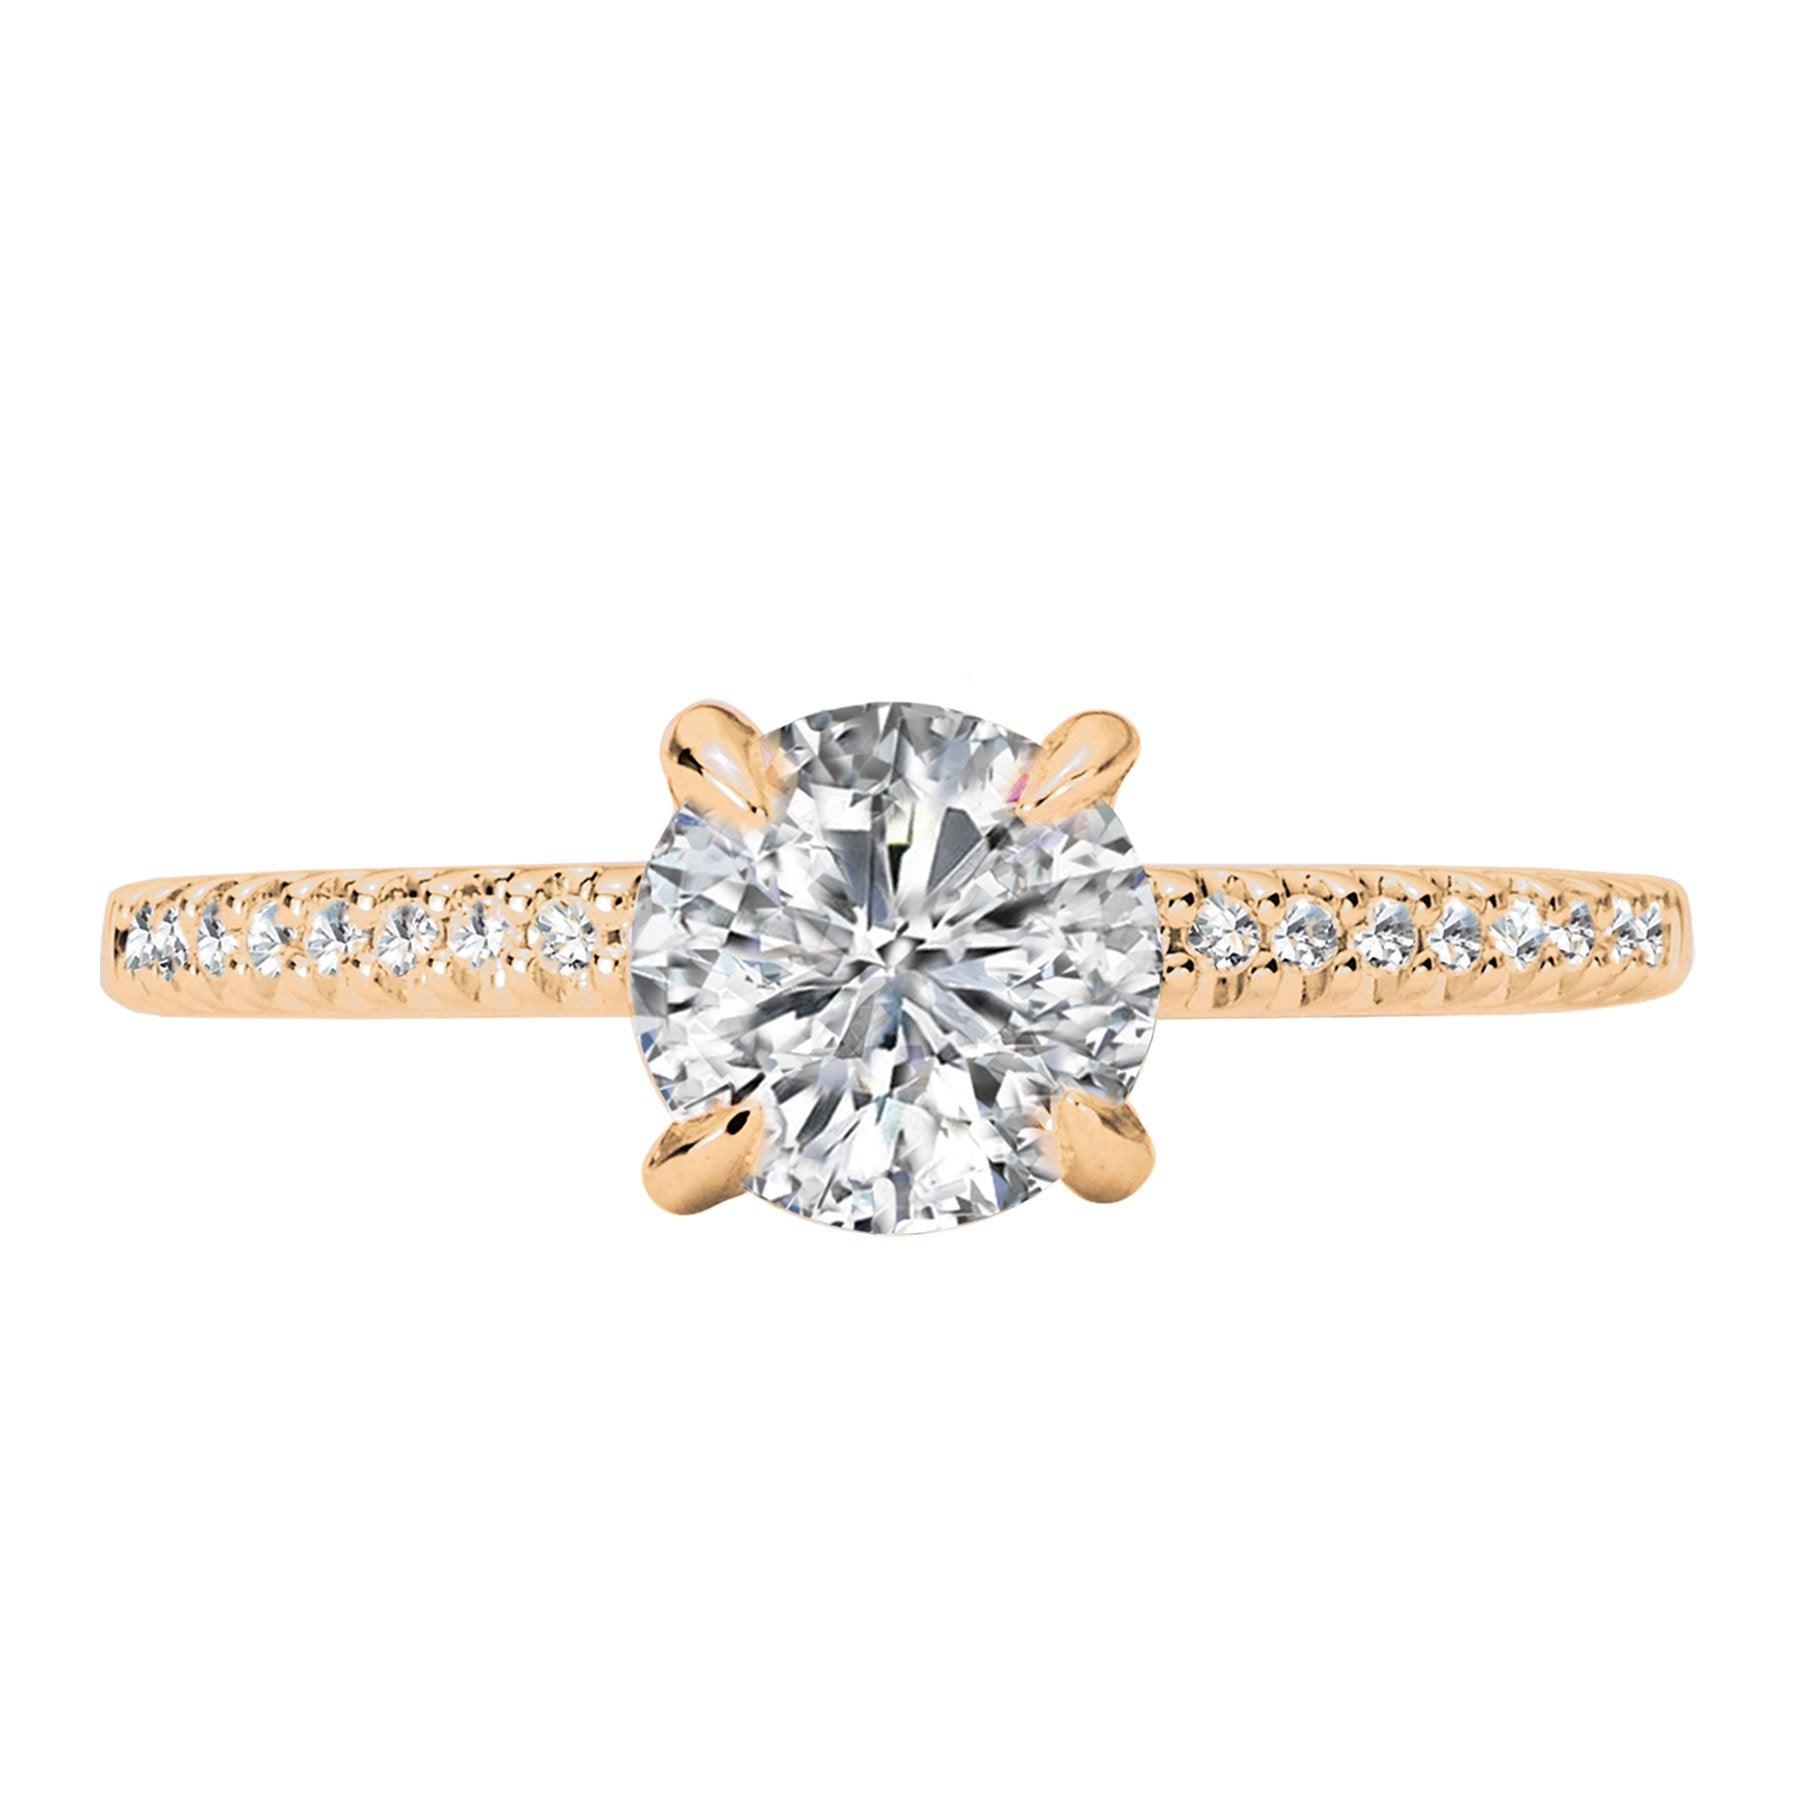 BW JAMES Engagement Rings "The London" Classic Semi-Mount Diamond Ring